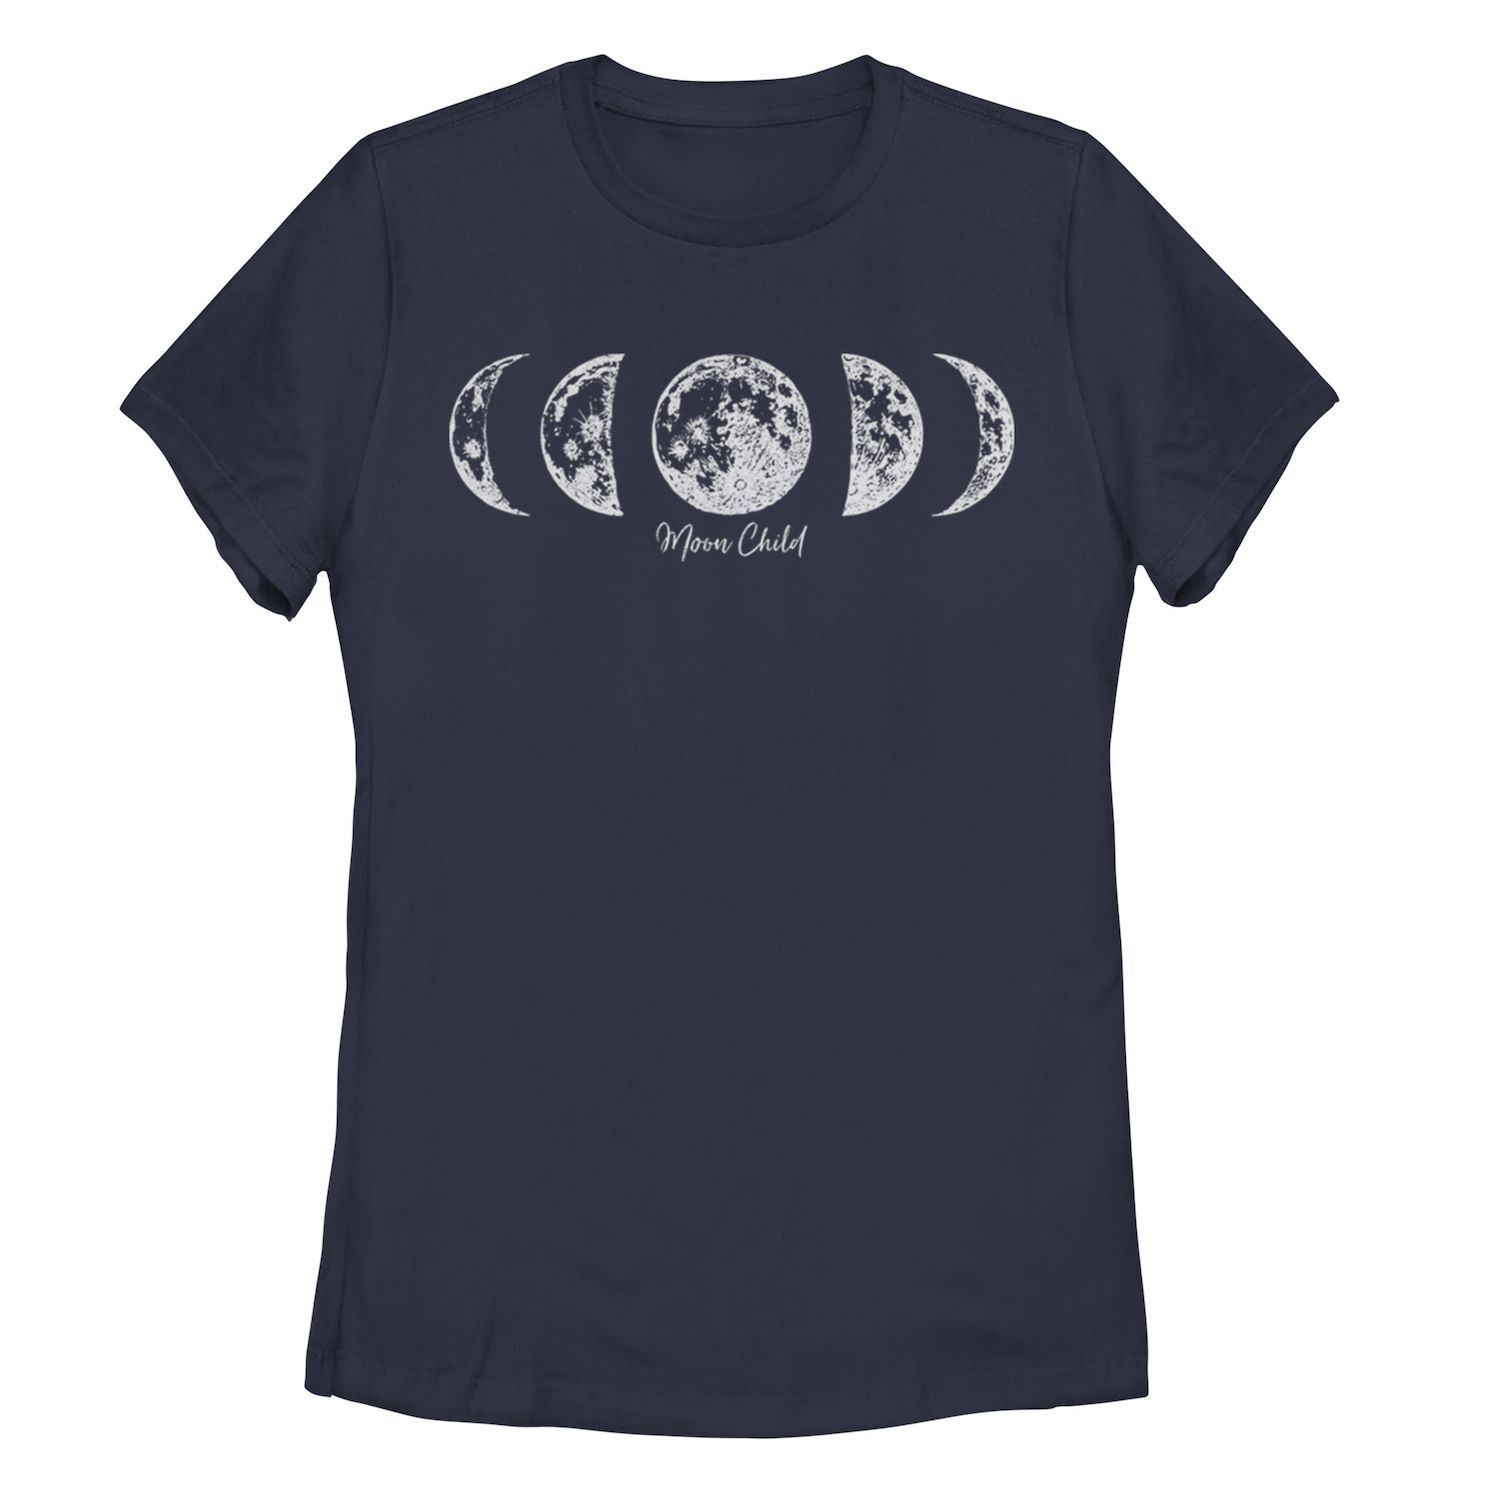 Детская футболка с рисунком Moon Child Galactic, темно-синий